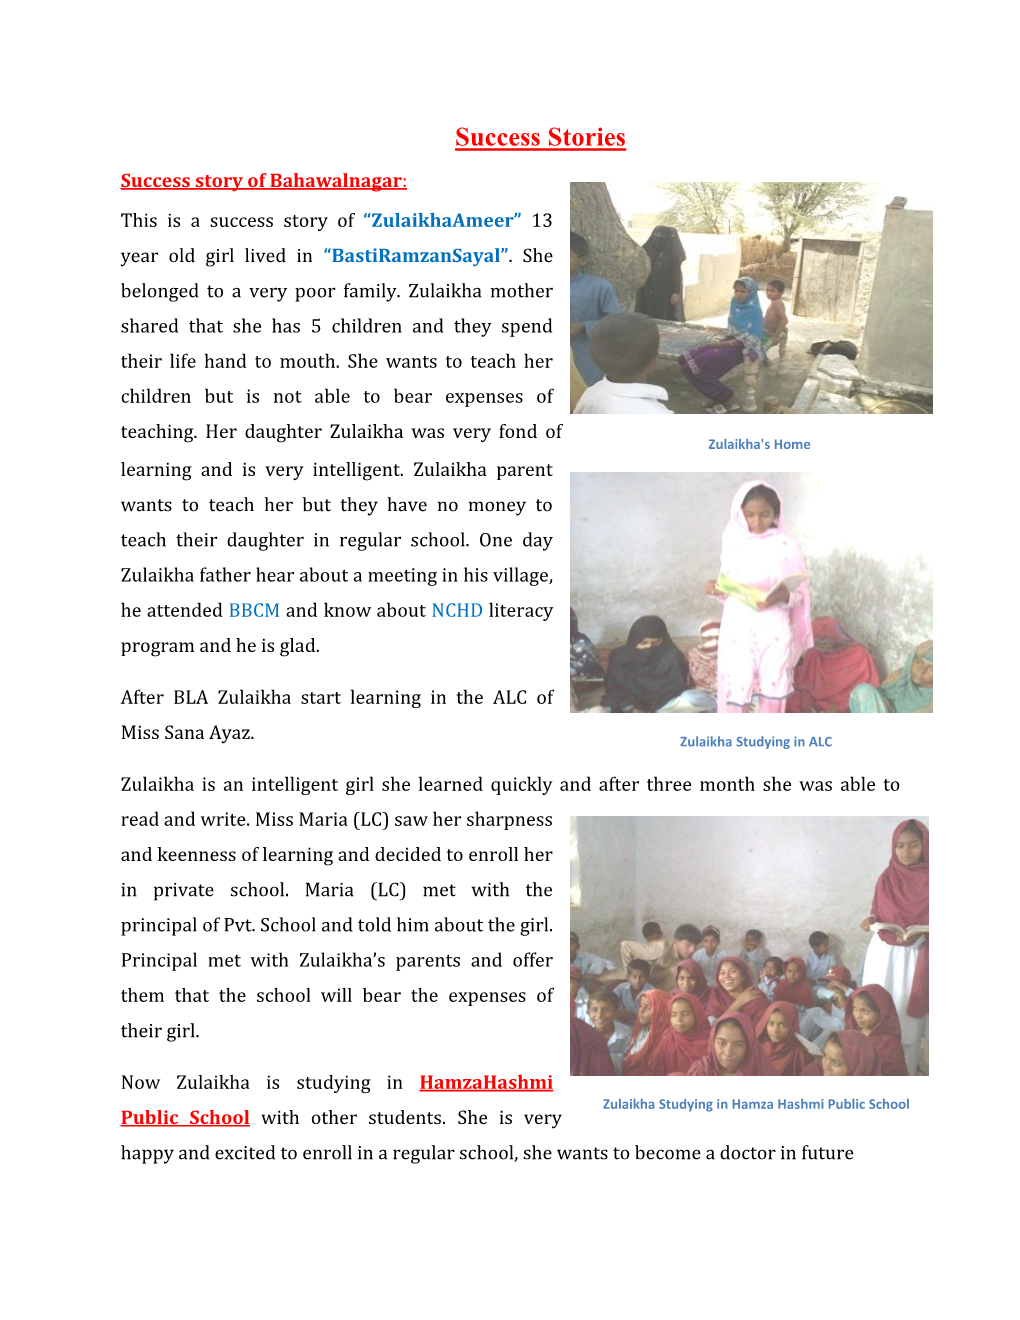 Success Stories Success Story of Bahawalnagar: This Is a Success Story of “Zulaikhaameer” 13 Year Old Girl Lived in “Bastiramzansayal”